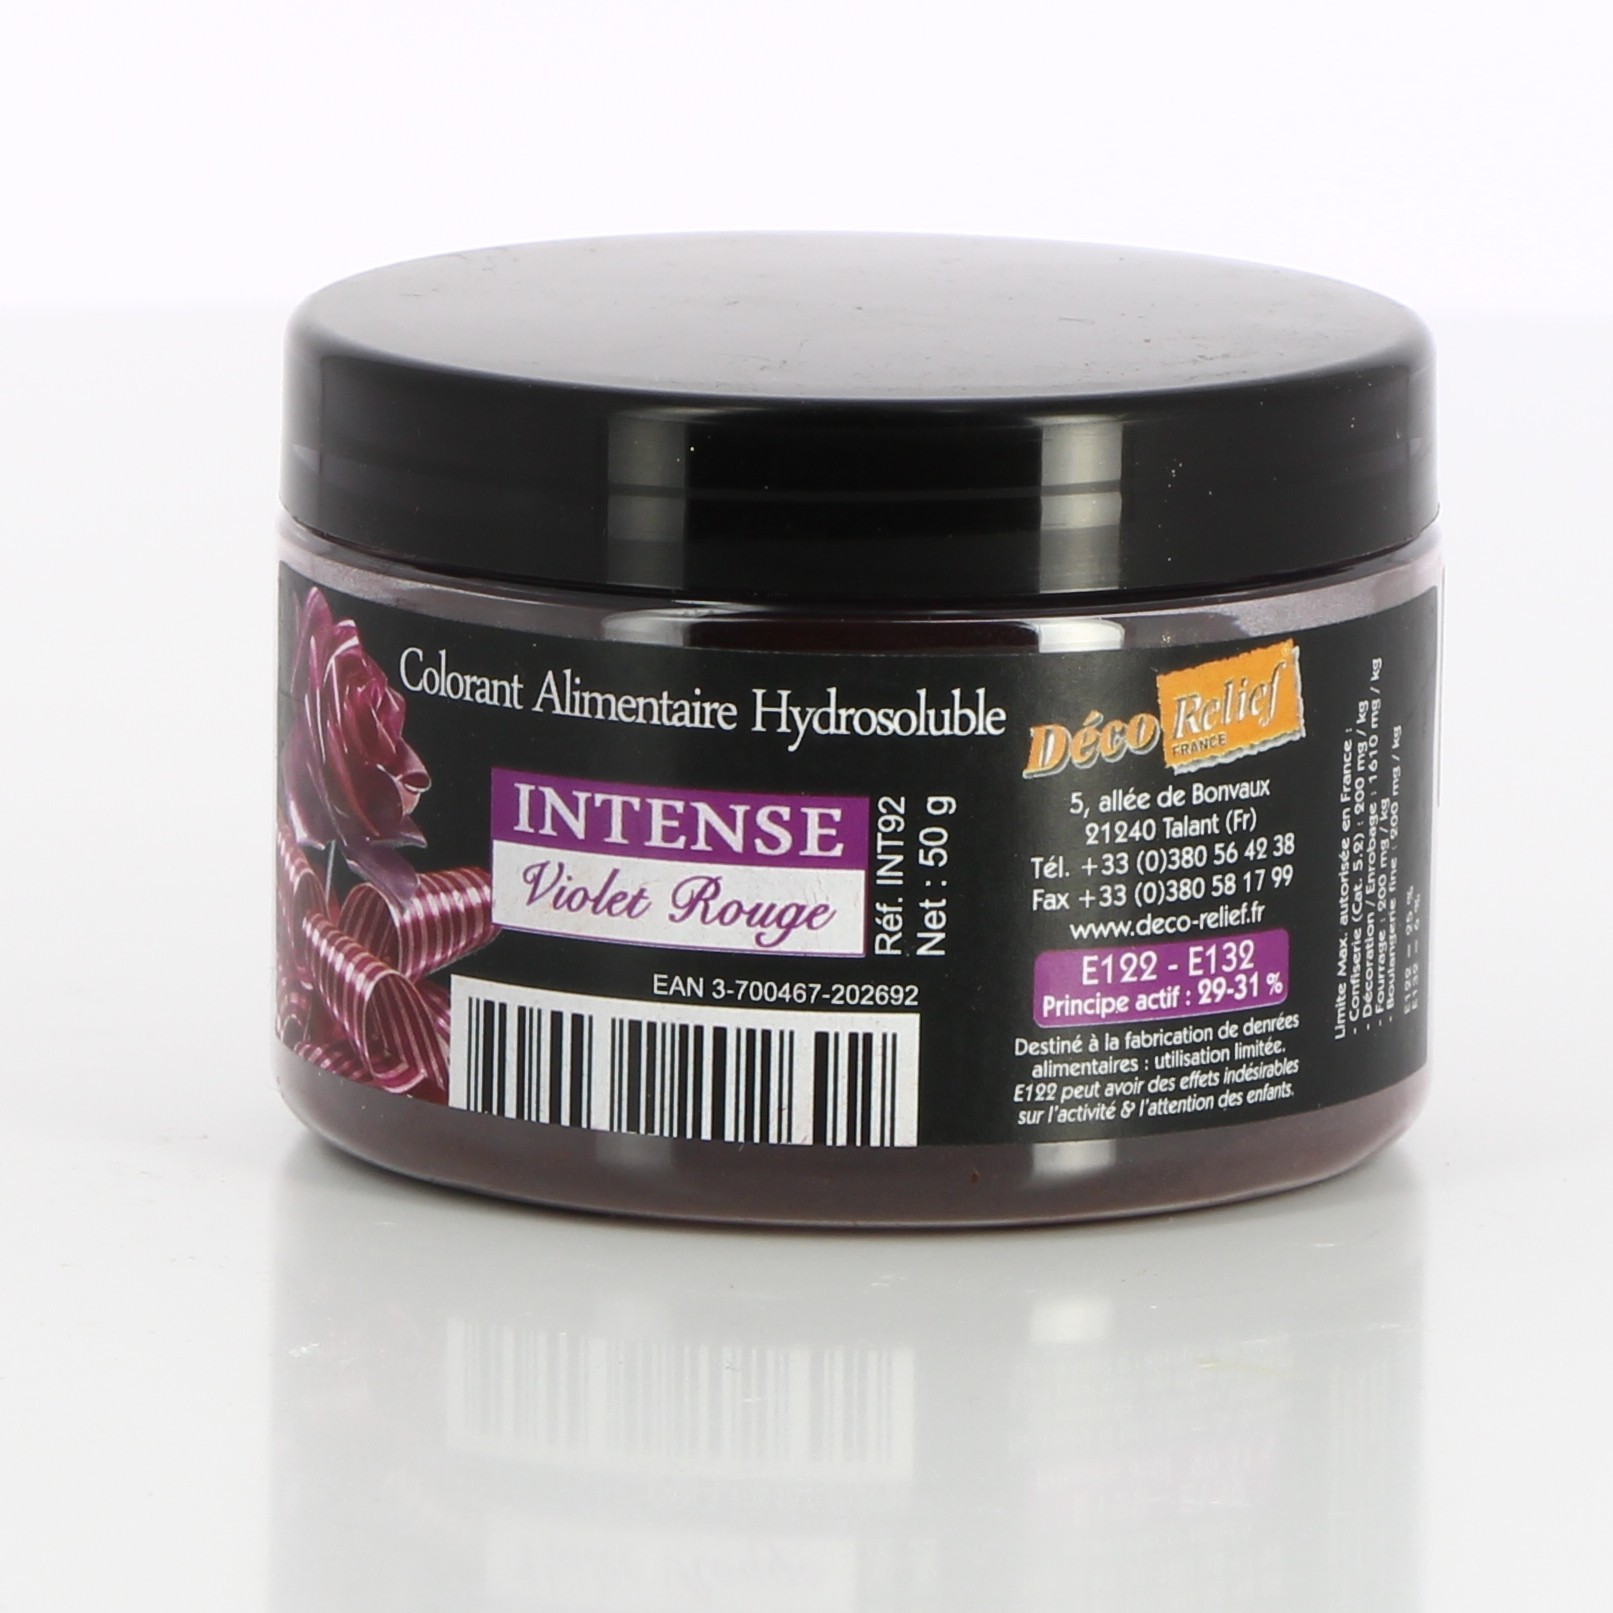 Colorant violet-rouge intense (poudre alimentaire) 50 g - Deco Relief